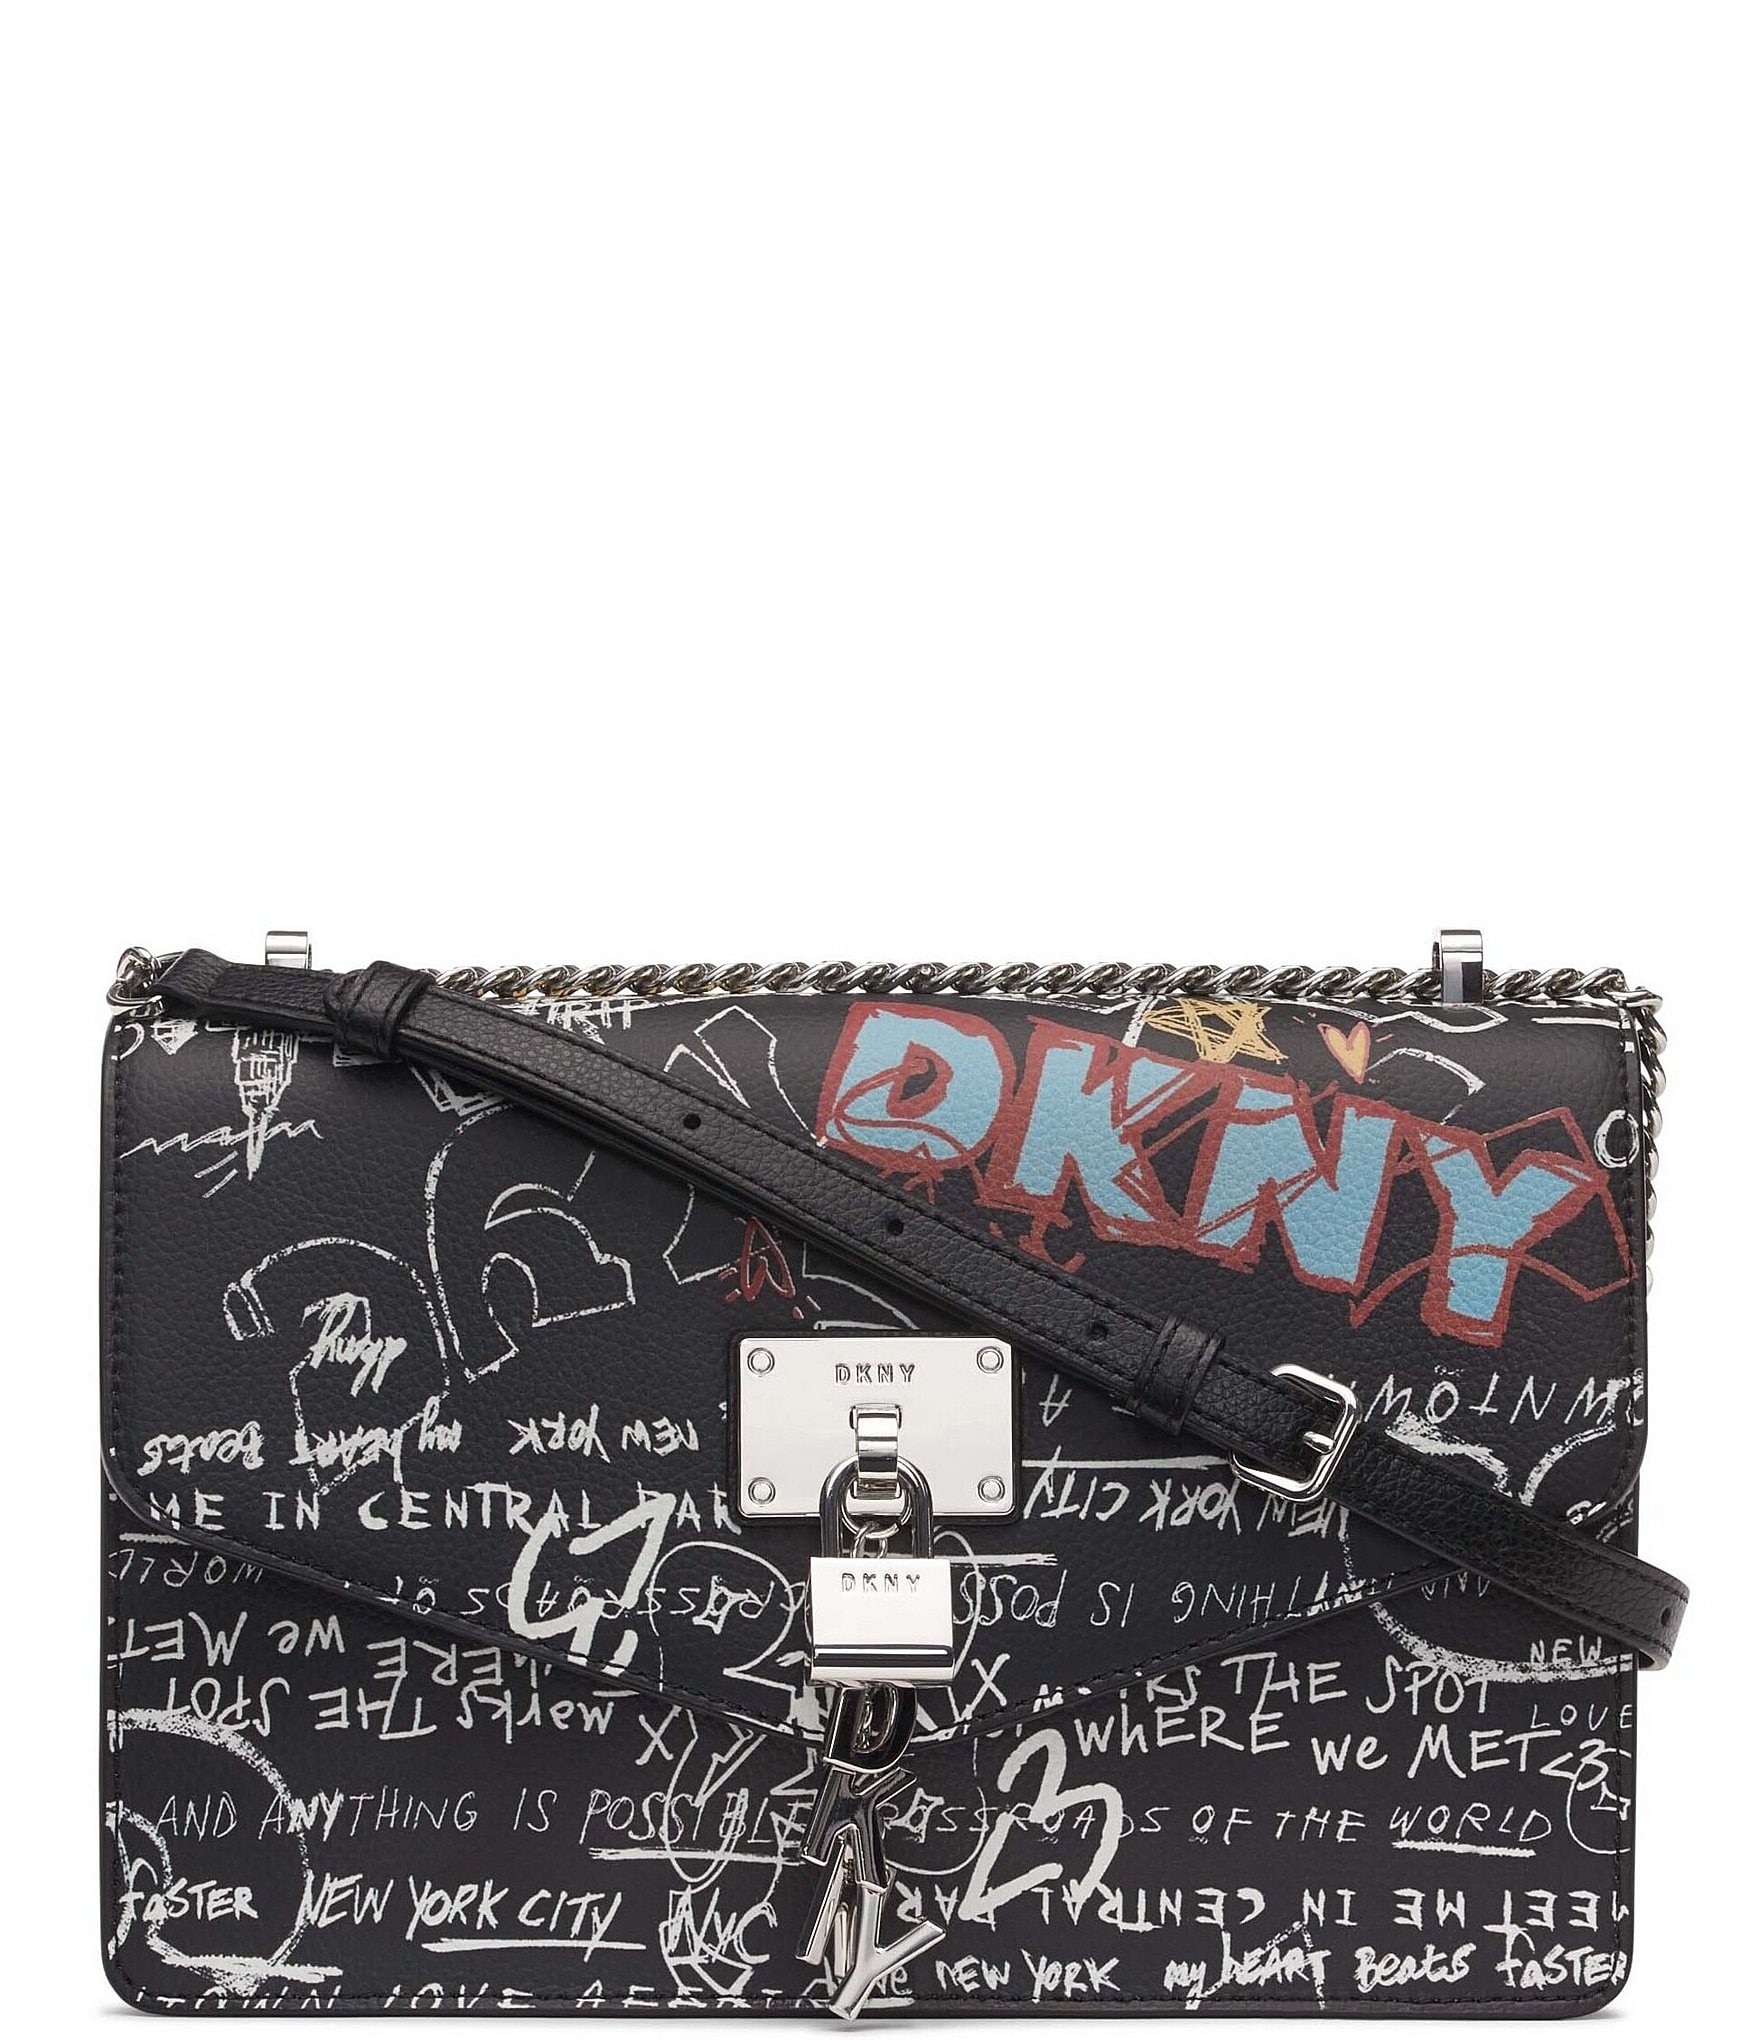 NWT DKNY Elissa GRAFFITI Black 100% LEATHER Pebbled CROSSBODY BAG MSRP $148